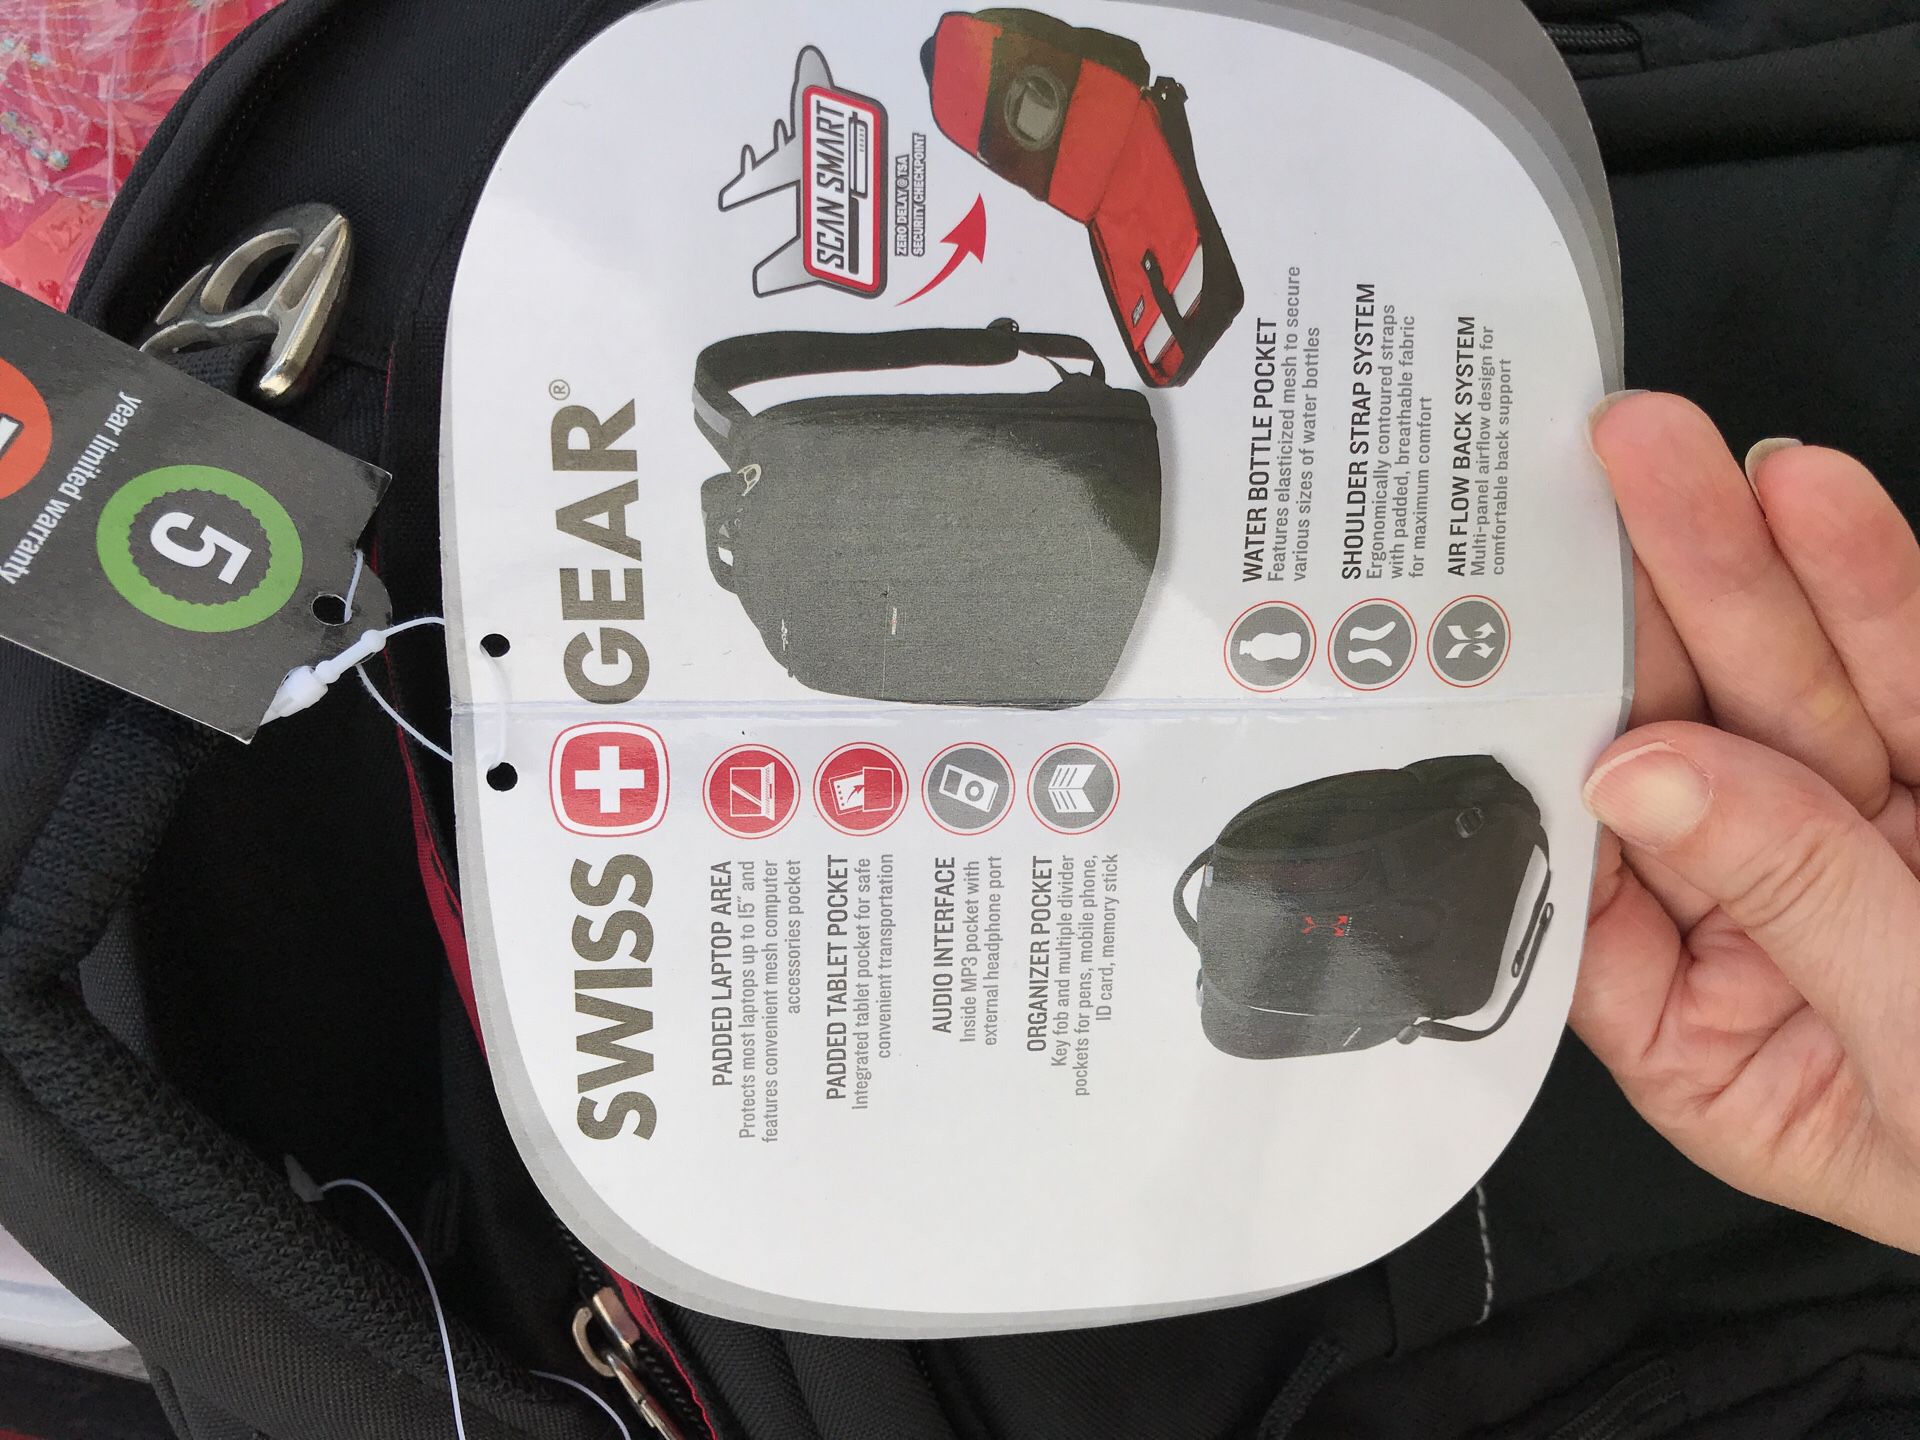 Swiss gear black 15” laptop backpack for work or school